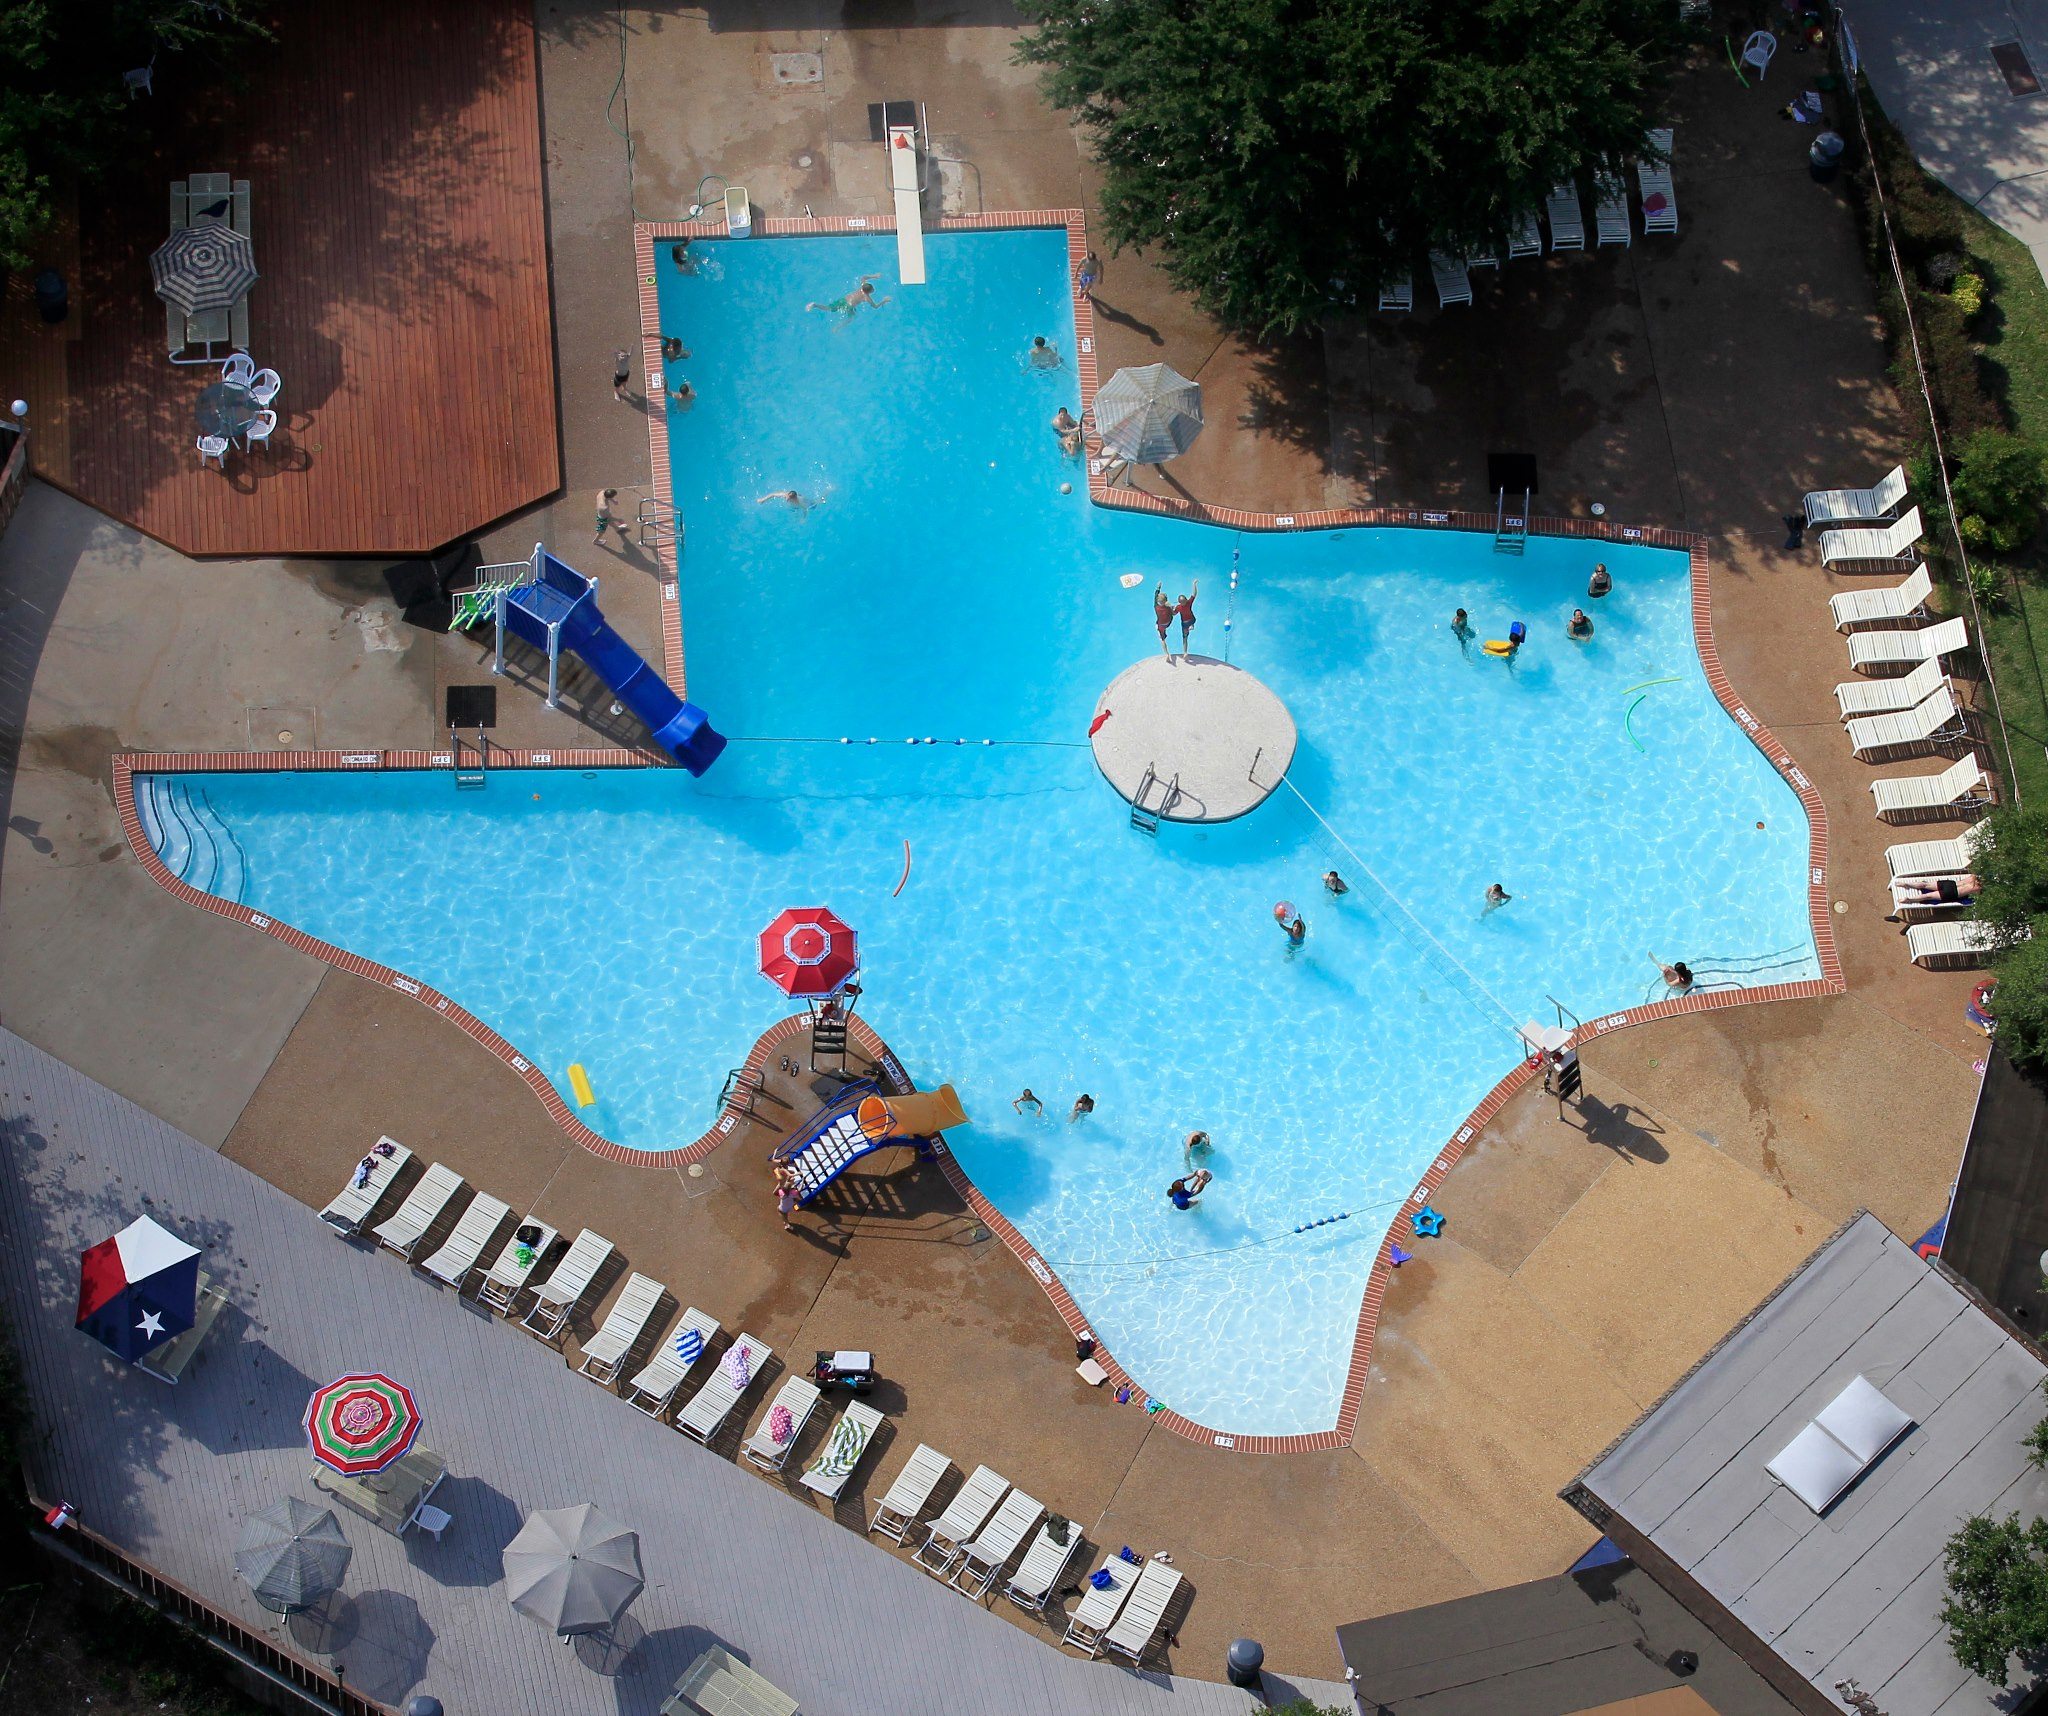 The Texas Pool aerial